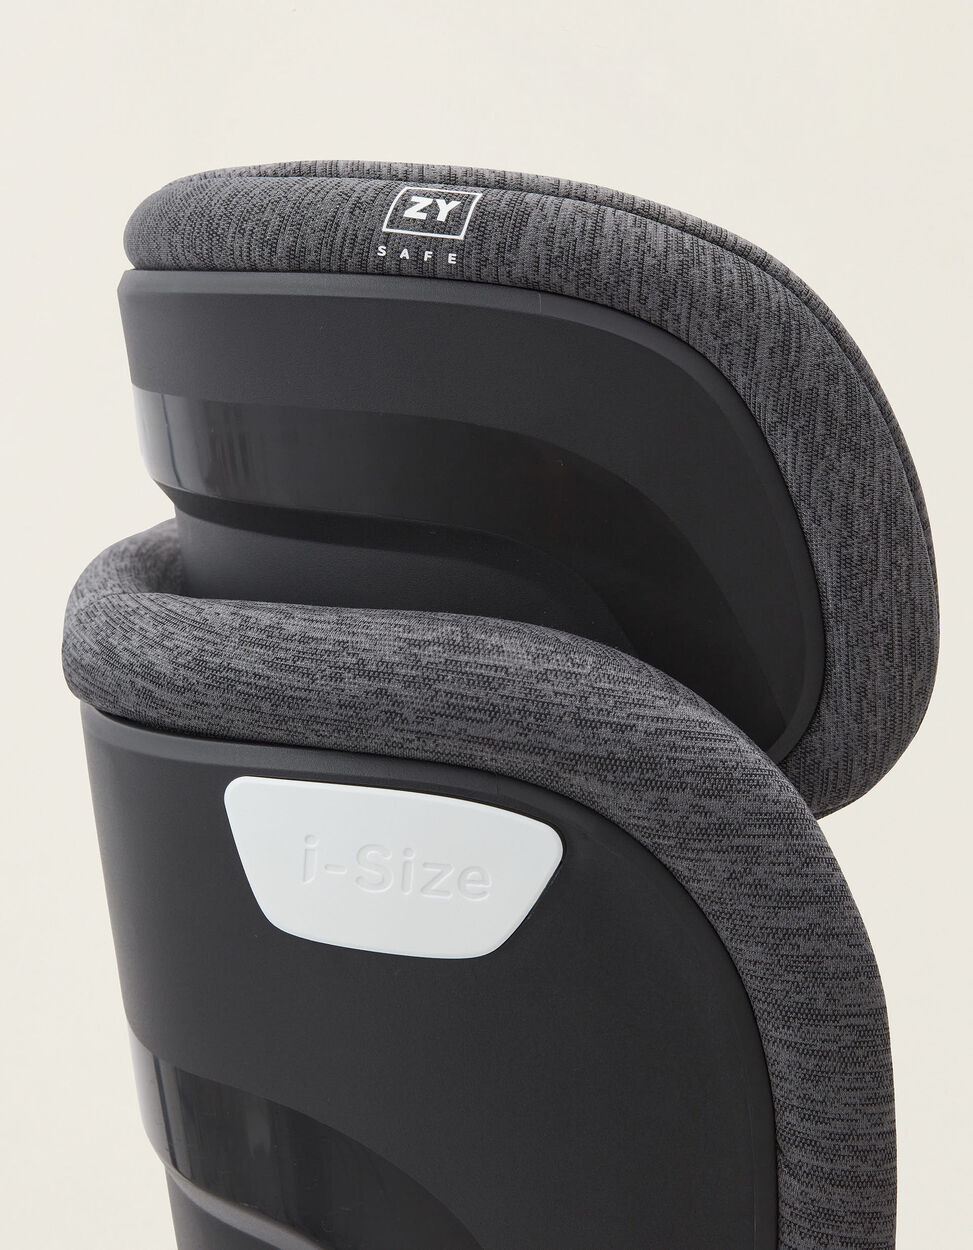 Cadeira Auto I-Size ZY Safe Luxe (100-150cm), Cinza